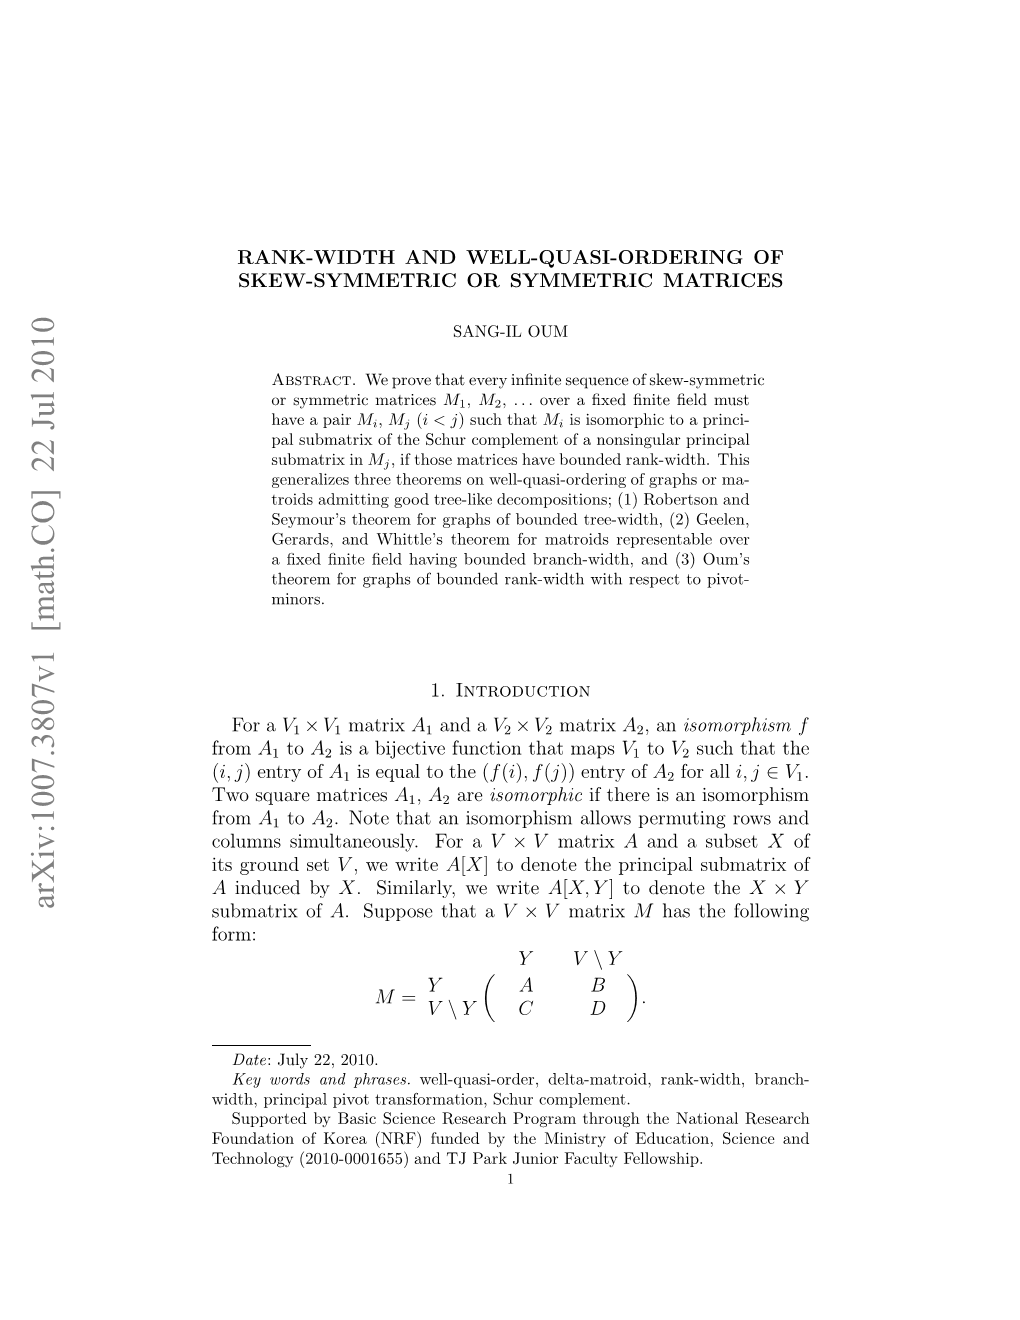 Rank-Width and Well-Quasi-Ordering of Skew-Symmetric Or Symmetric